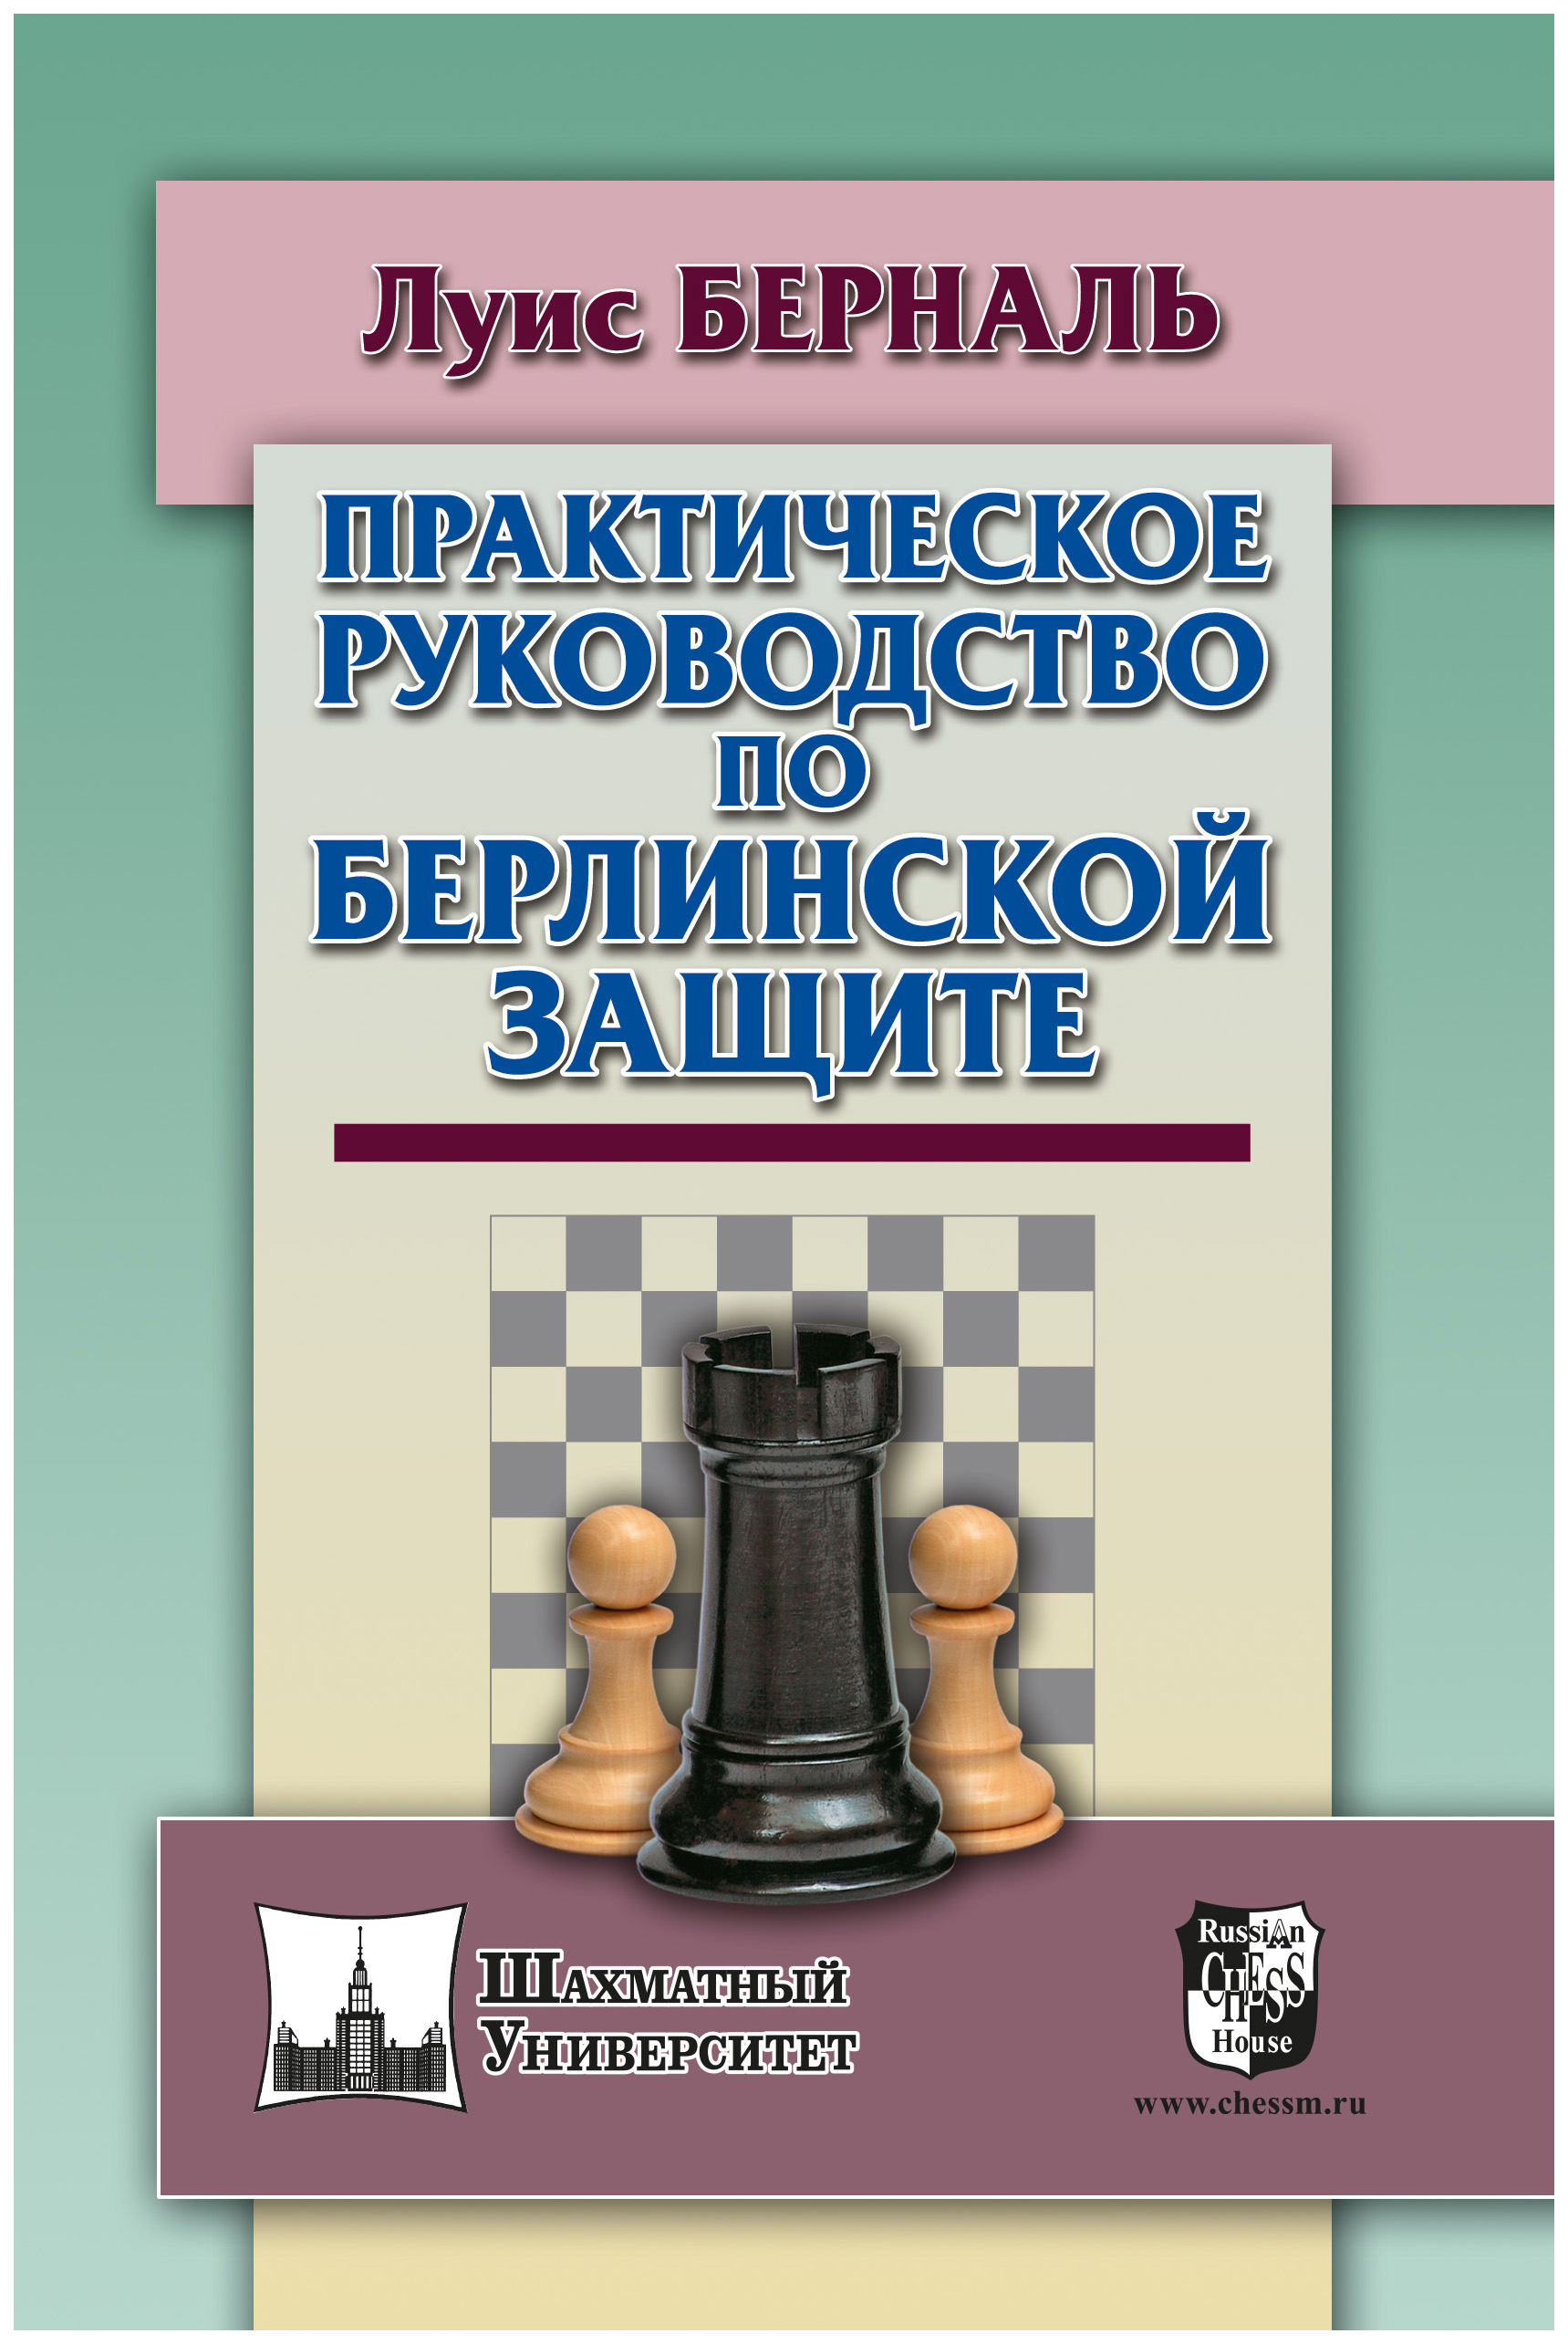 фото Книга russian chess house берналь л. "практическое руководство по берлинской защите"